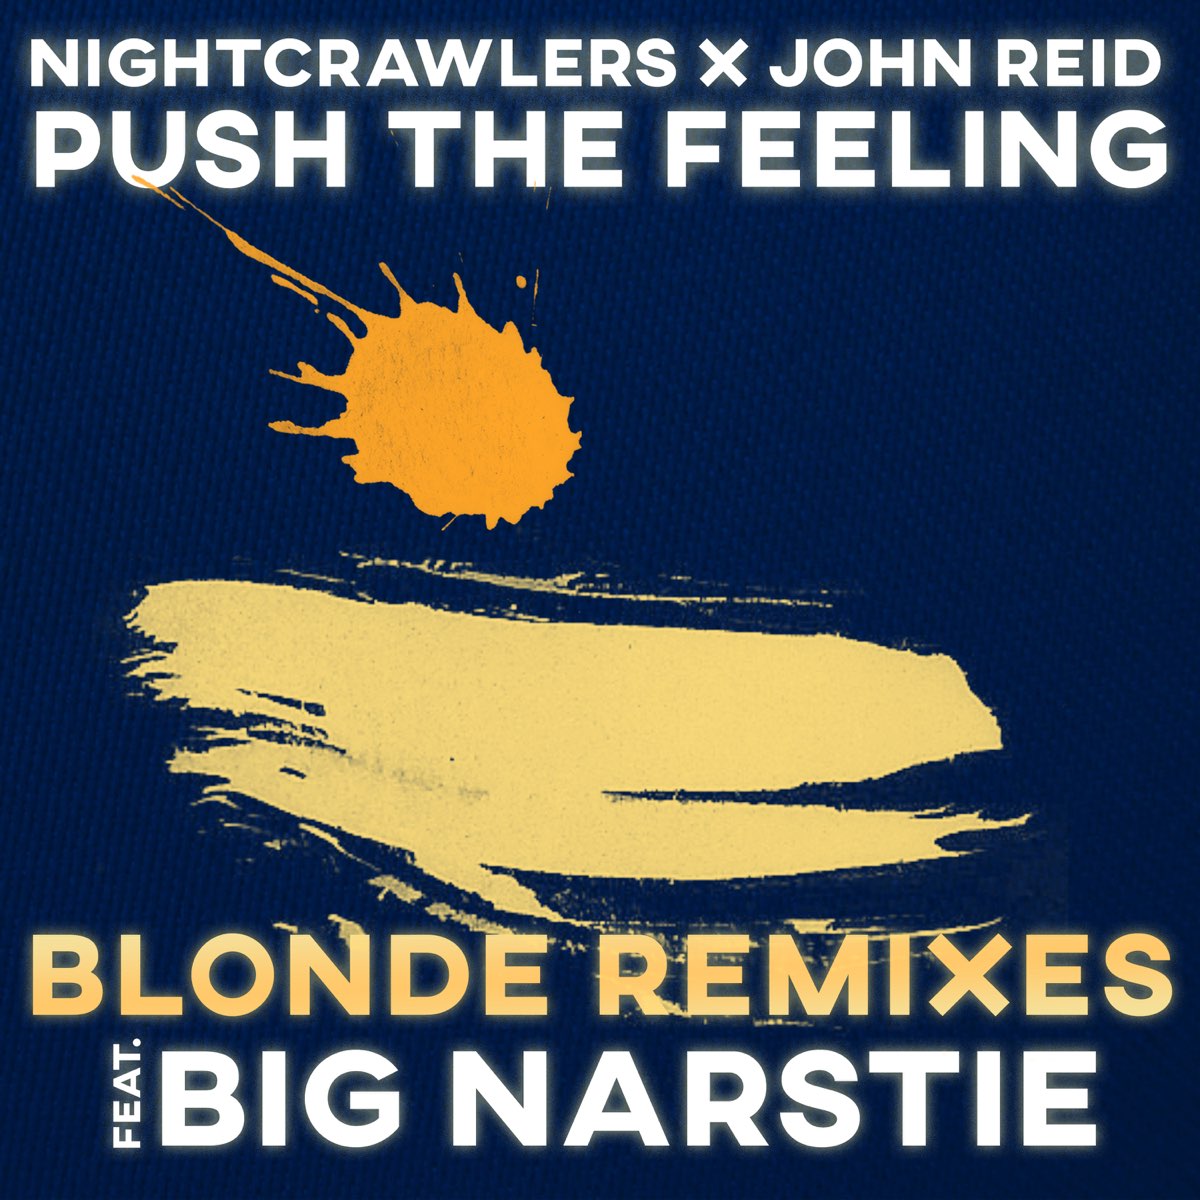 John Reid Nightcrawlers. John Reid (Music Manager). Nightcrawlers Push the feeling on Perfectov Remix. Greeat Jones Nightcrawlers Push the feeling on mp3. Nightcrawlers feeling on